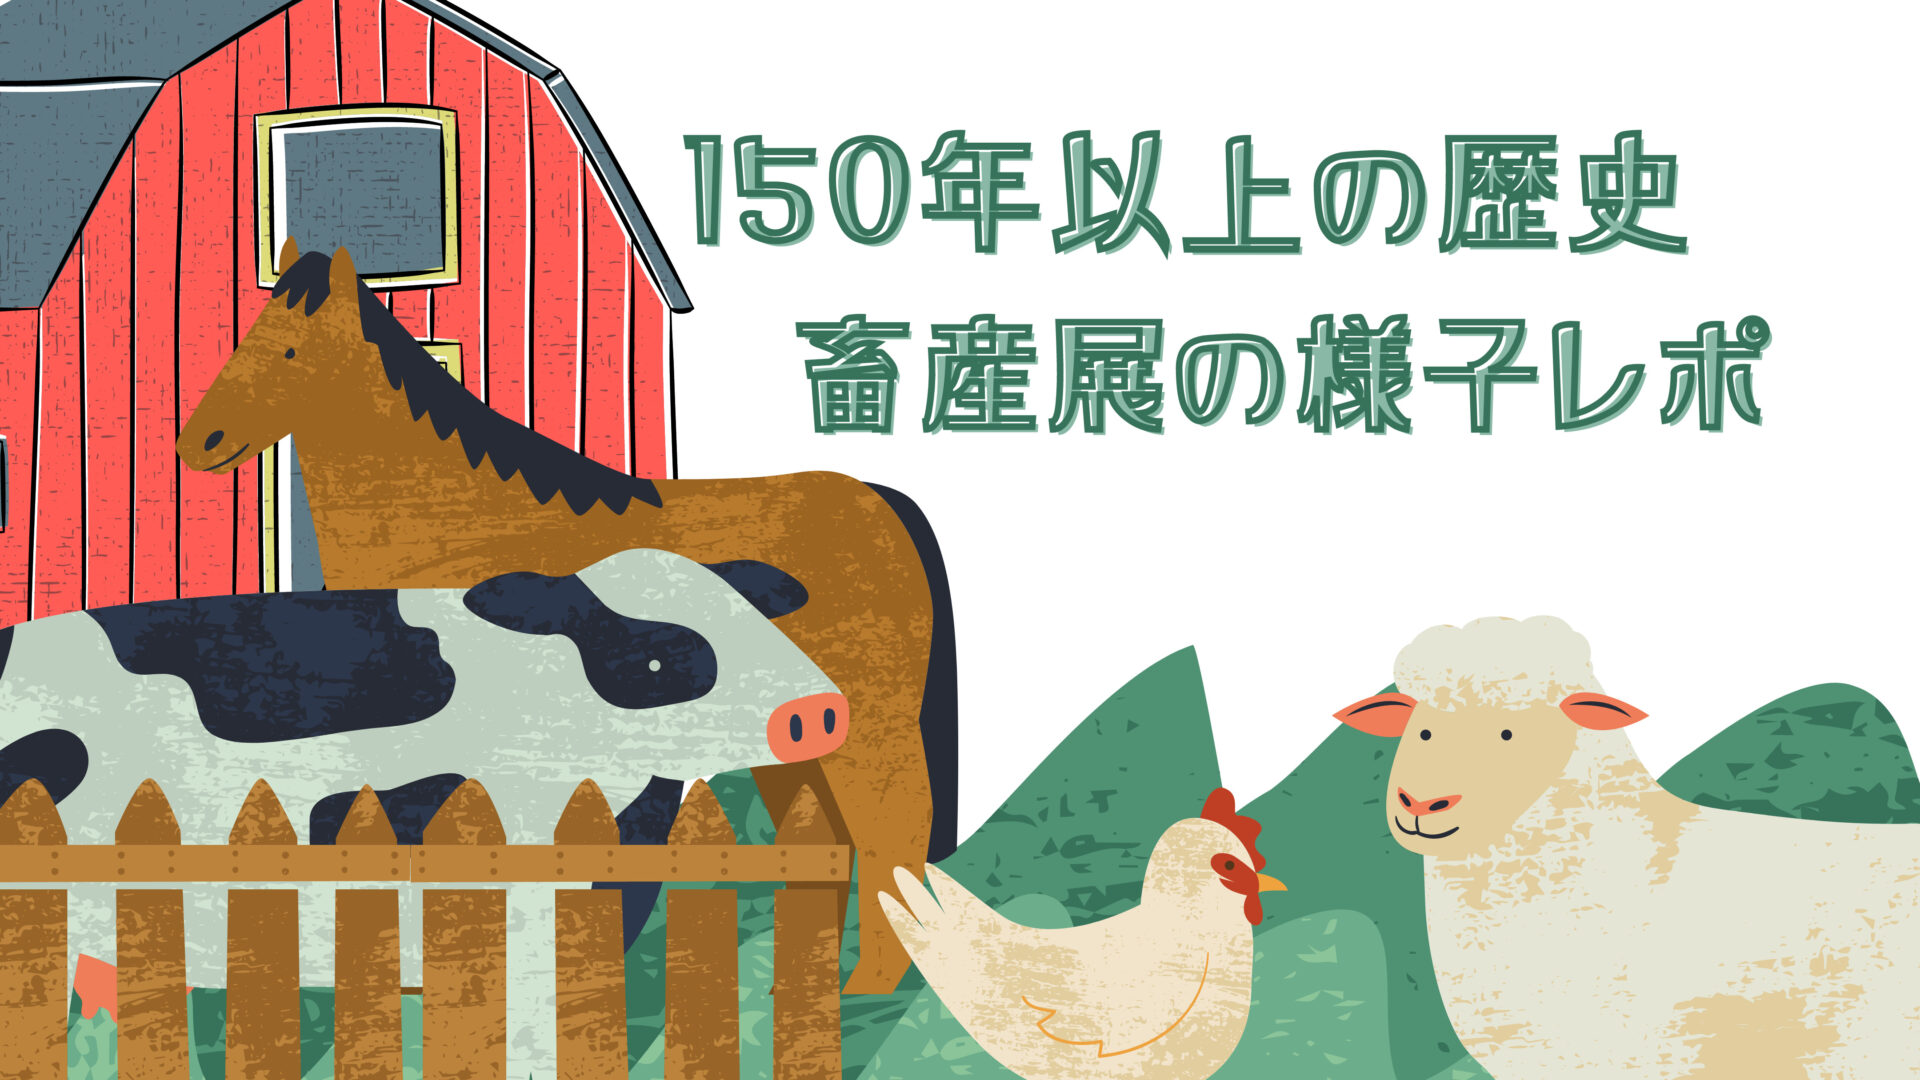 La Rural 150年以上続く畜産展